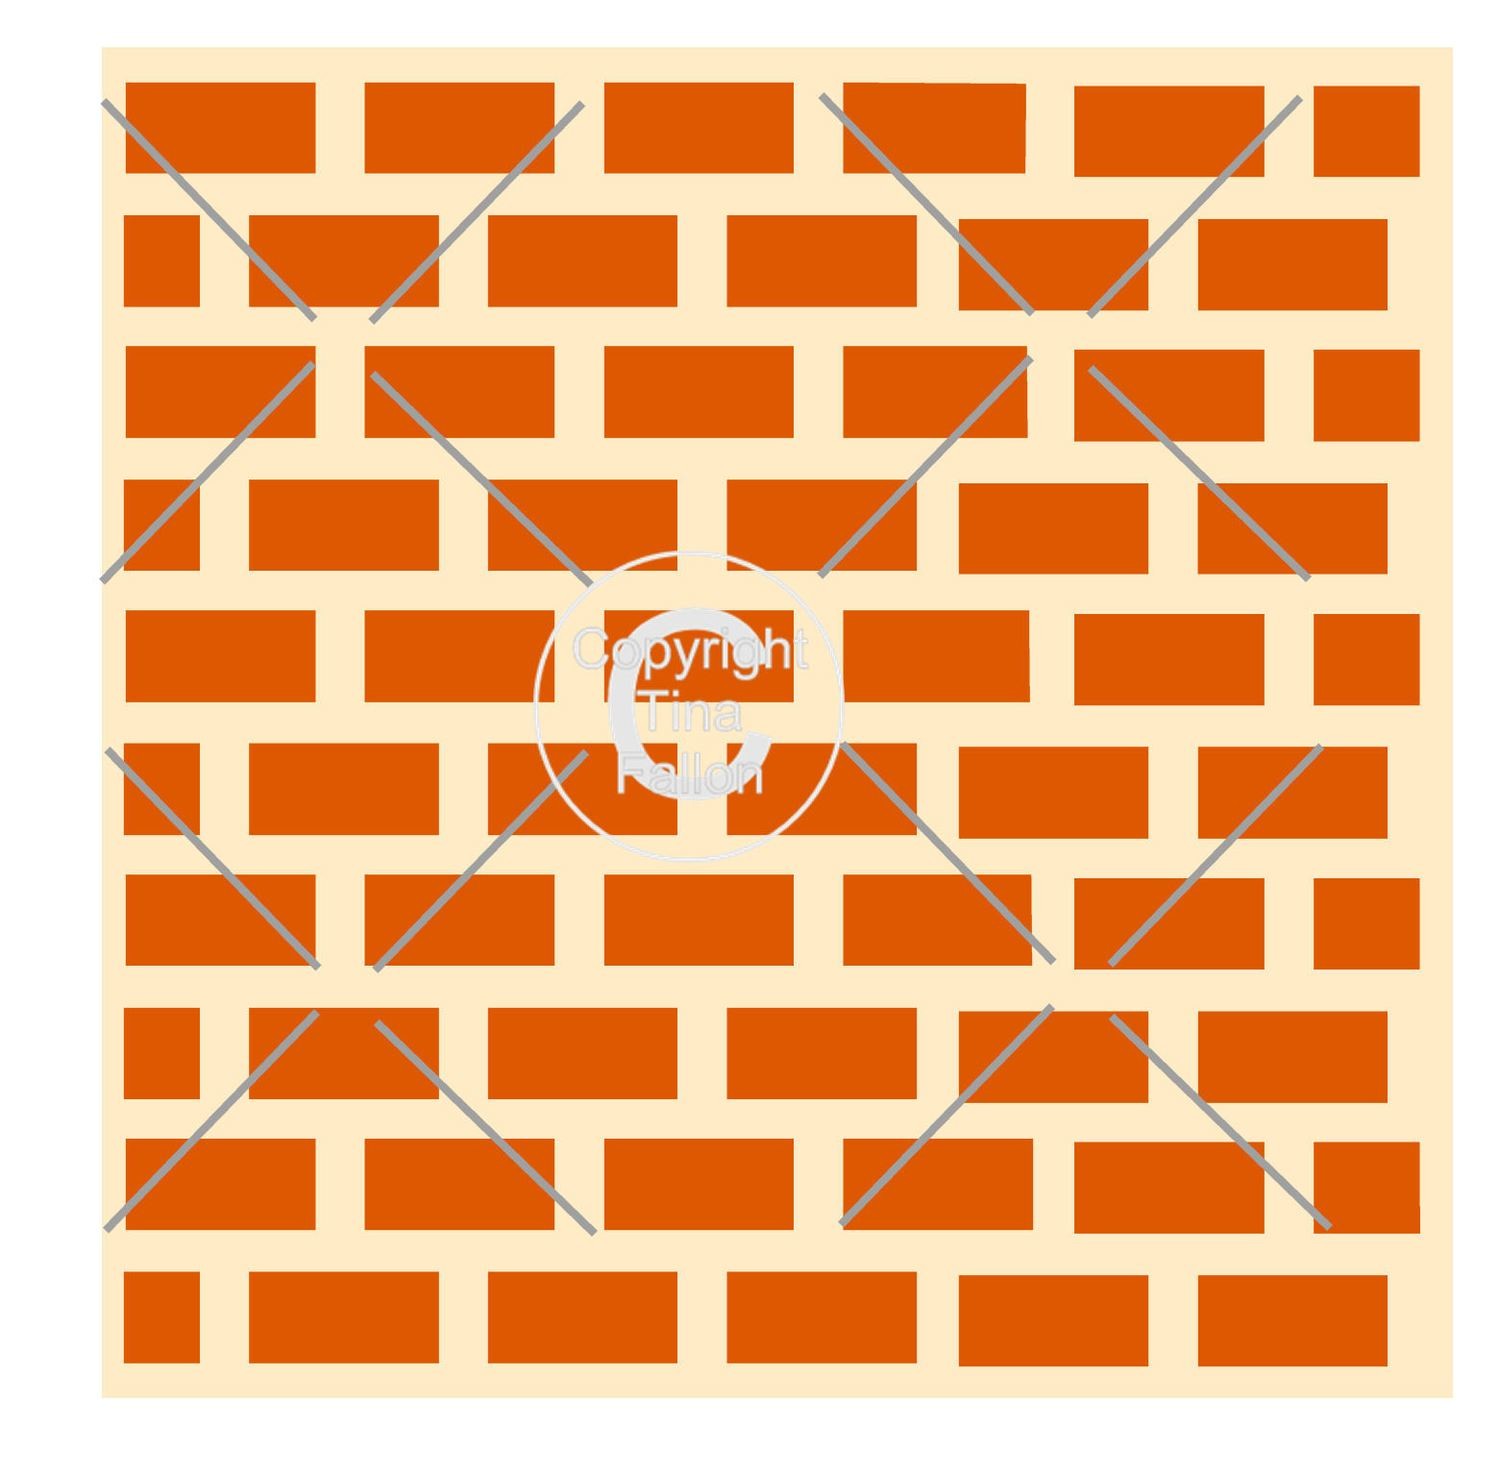 Brick Wall - Square template